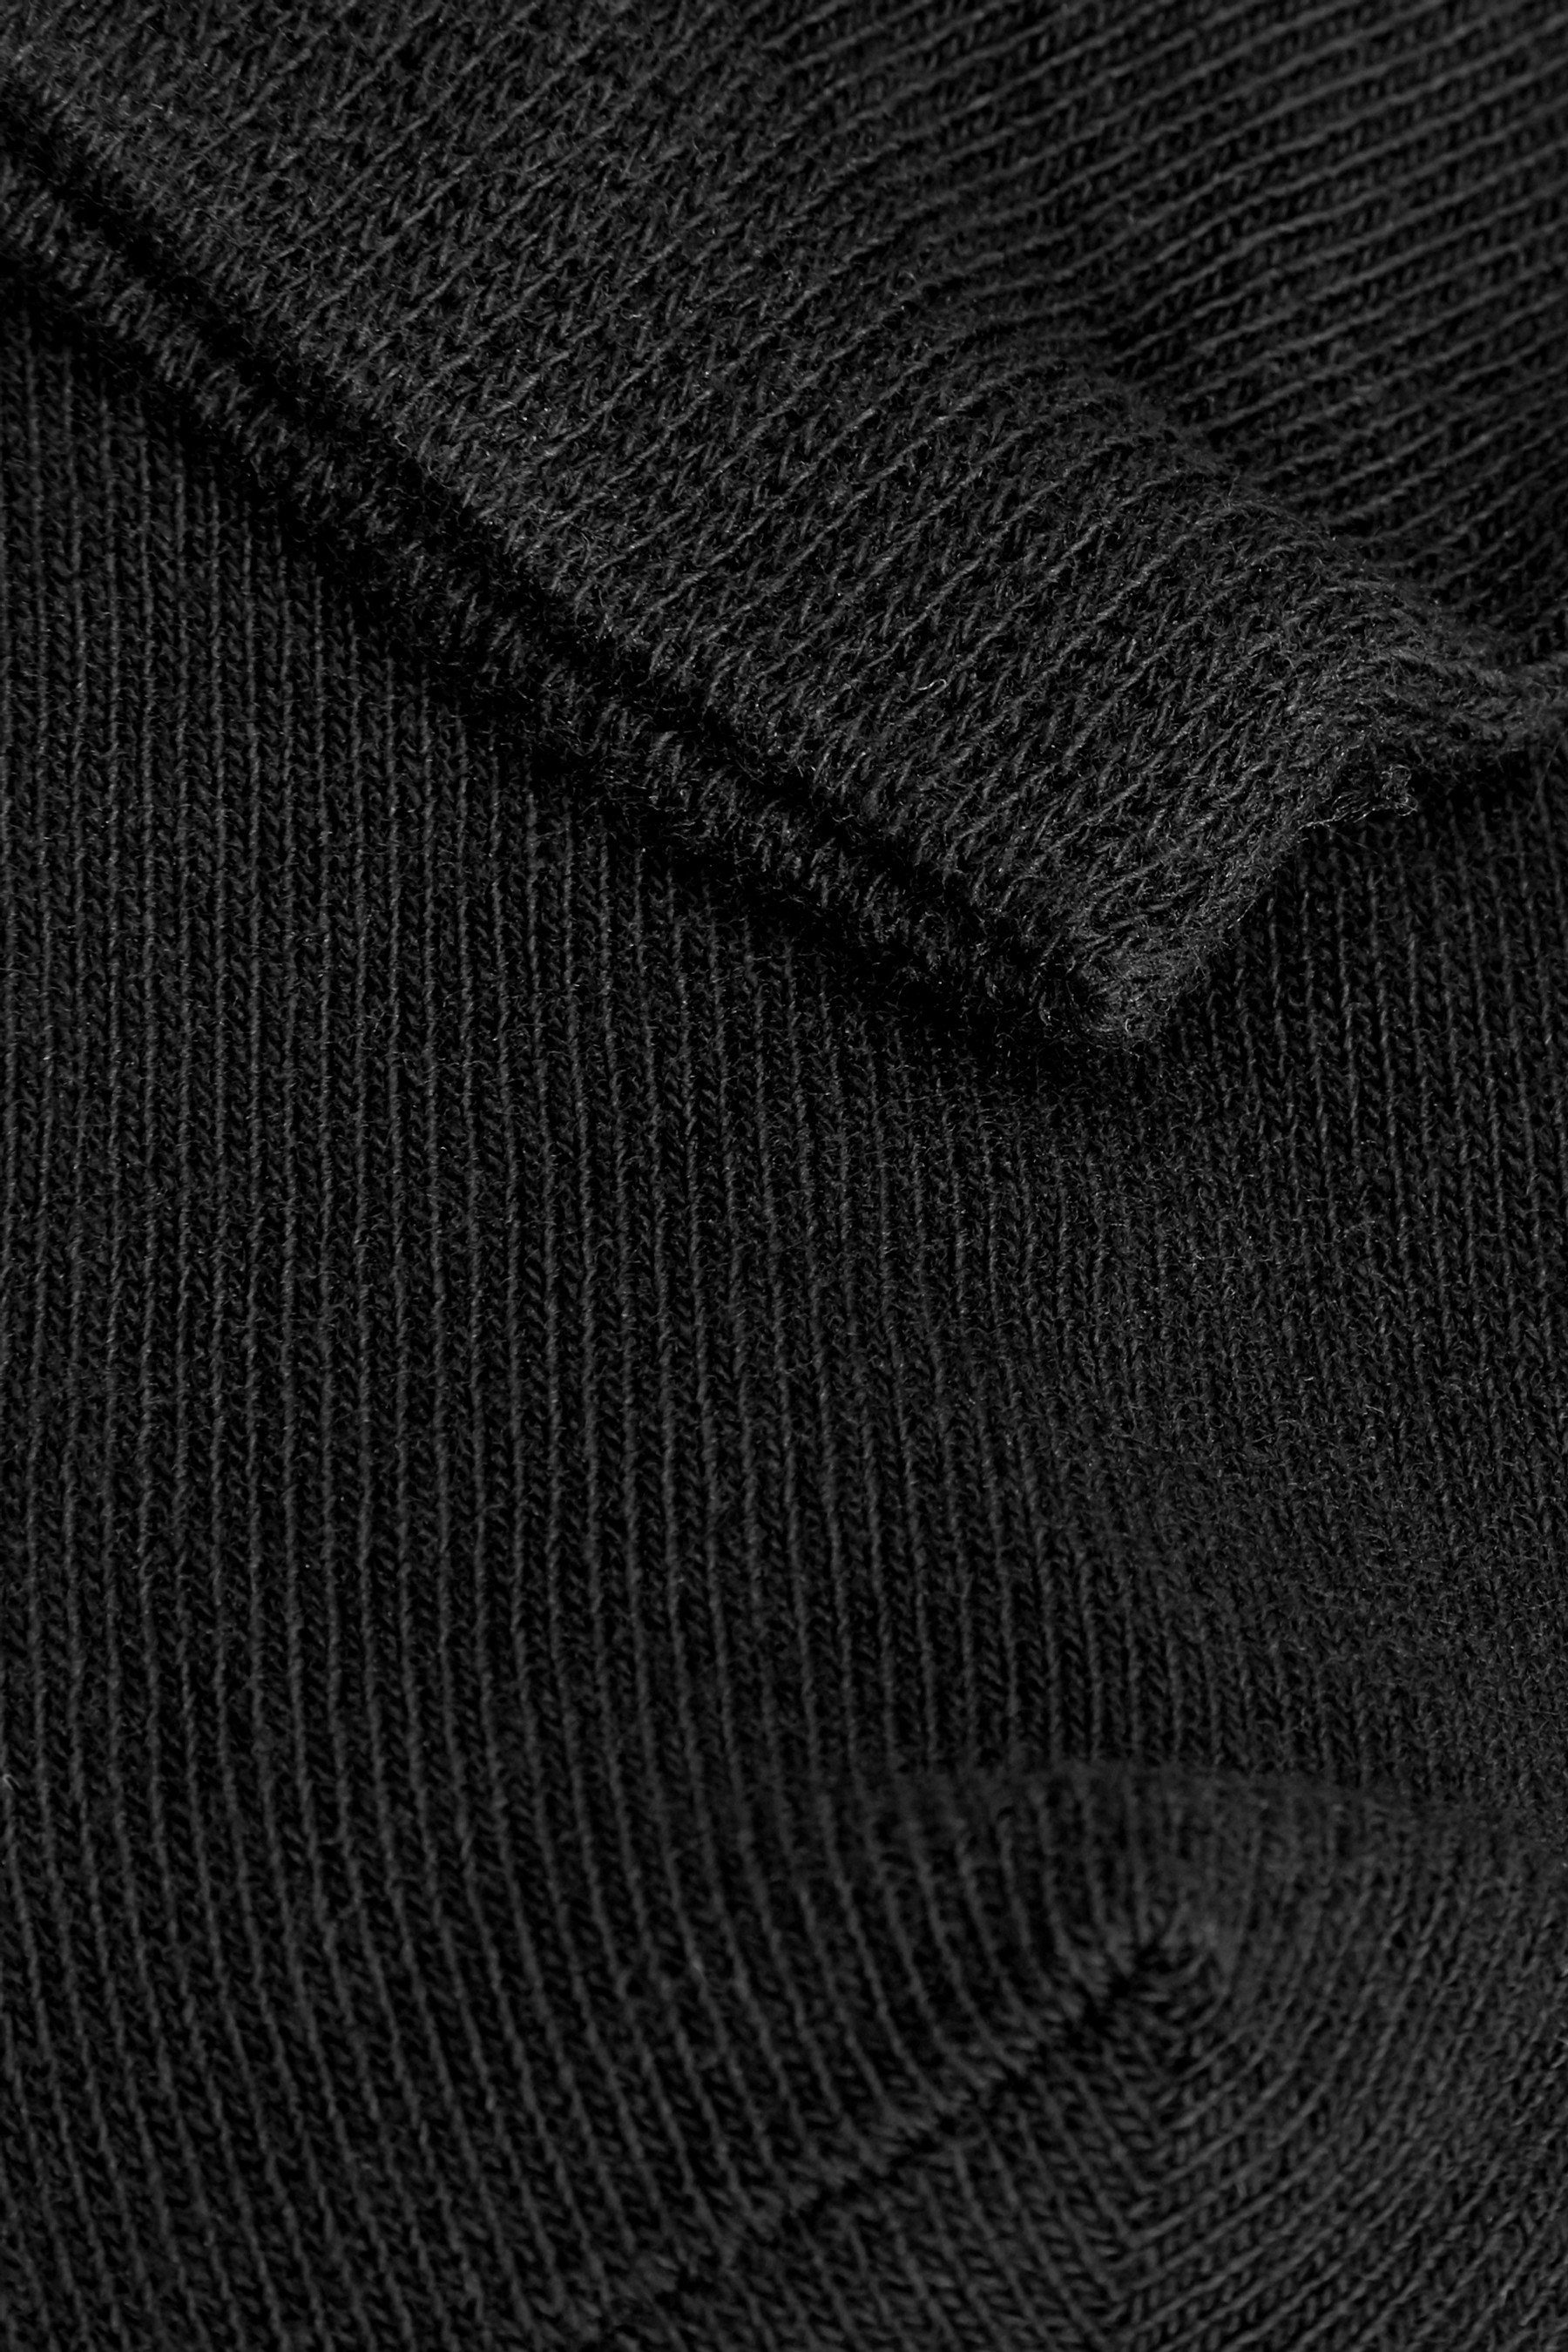 Next Socken Sneaker-Socken mit Baumwolle 5er-Pack im (5-Paar) Black